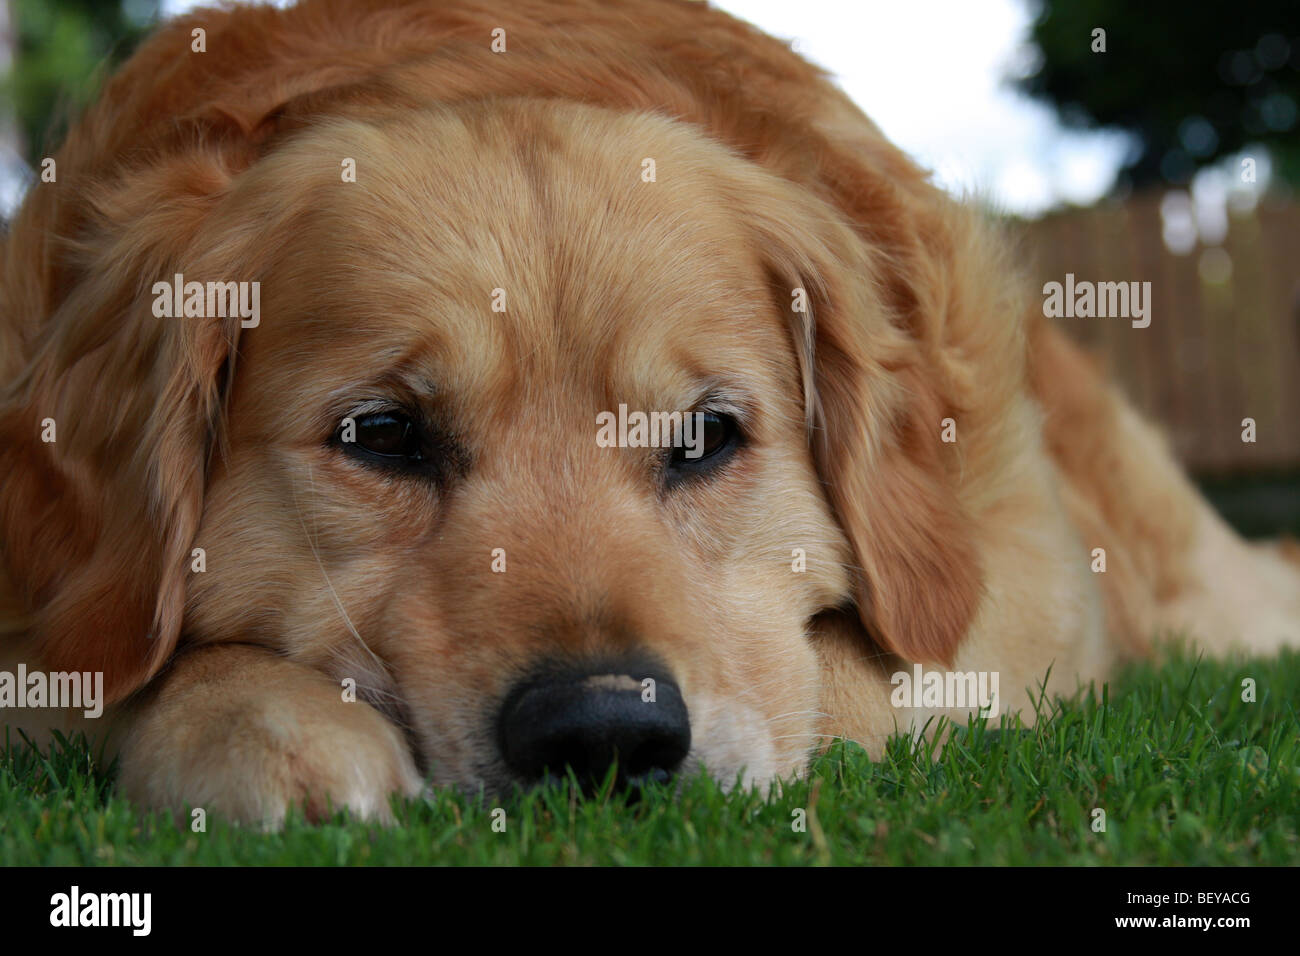 Sad golden retriever lying on the grass. Stock Photo